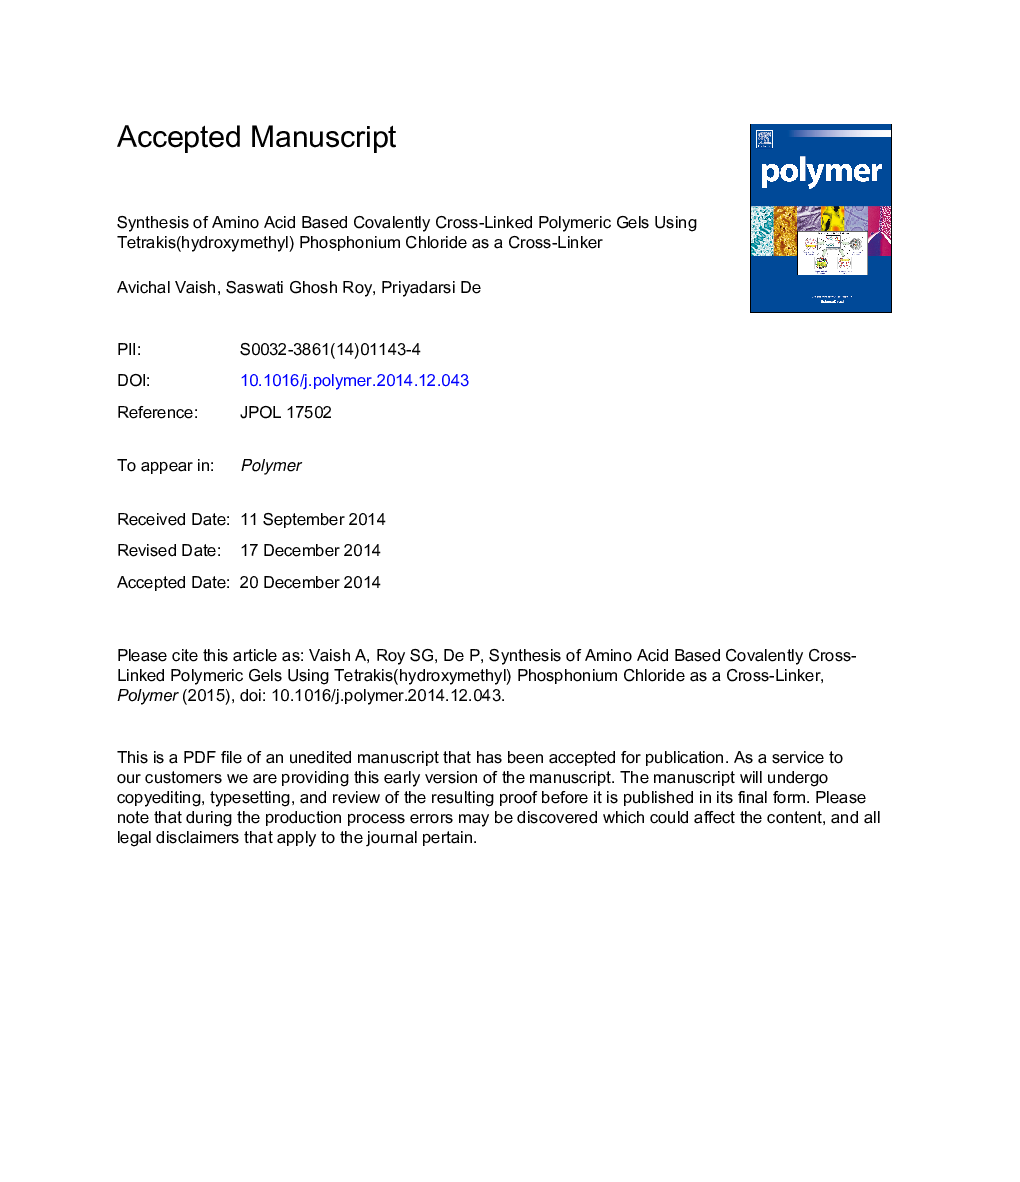 Synthesis of amino acid based covalently cross-linked polymeric gelsÂ using tetrakis(hydroxymethyl) phosphonium chloride as a cross-linker